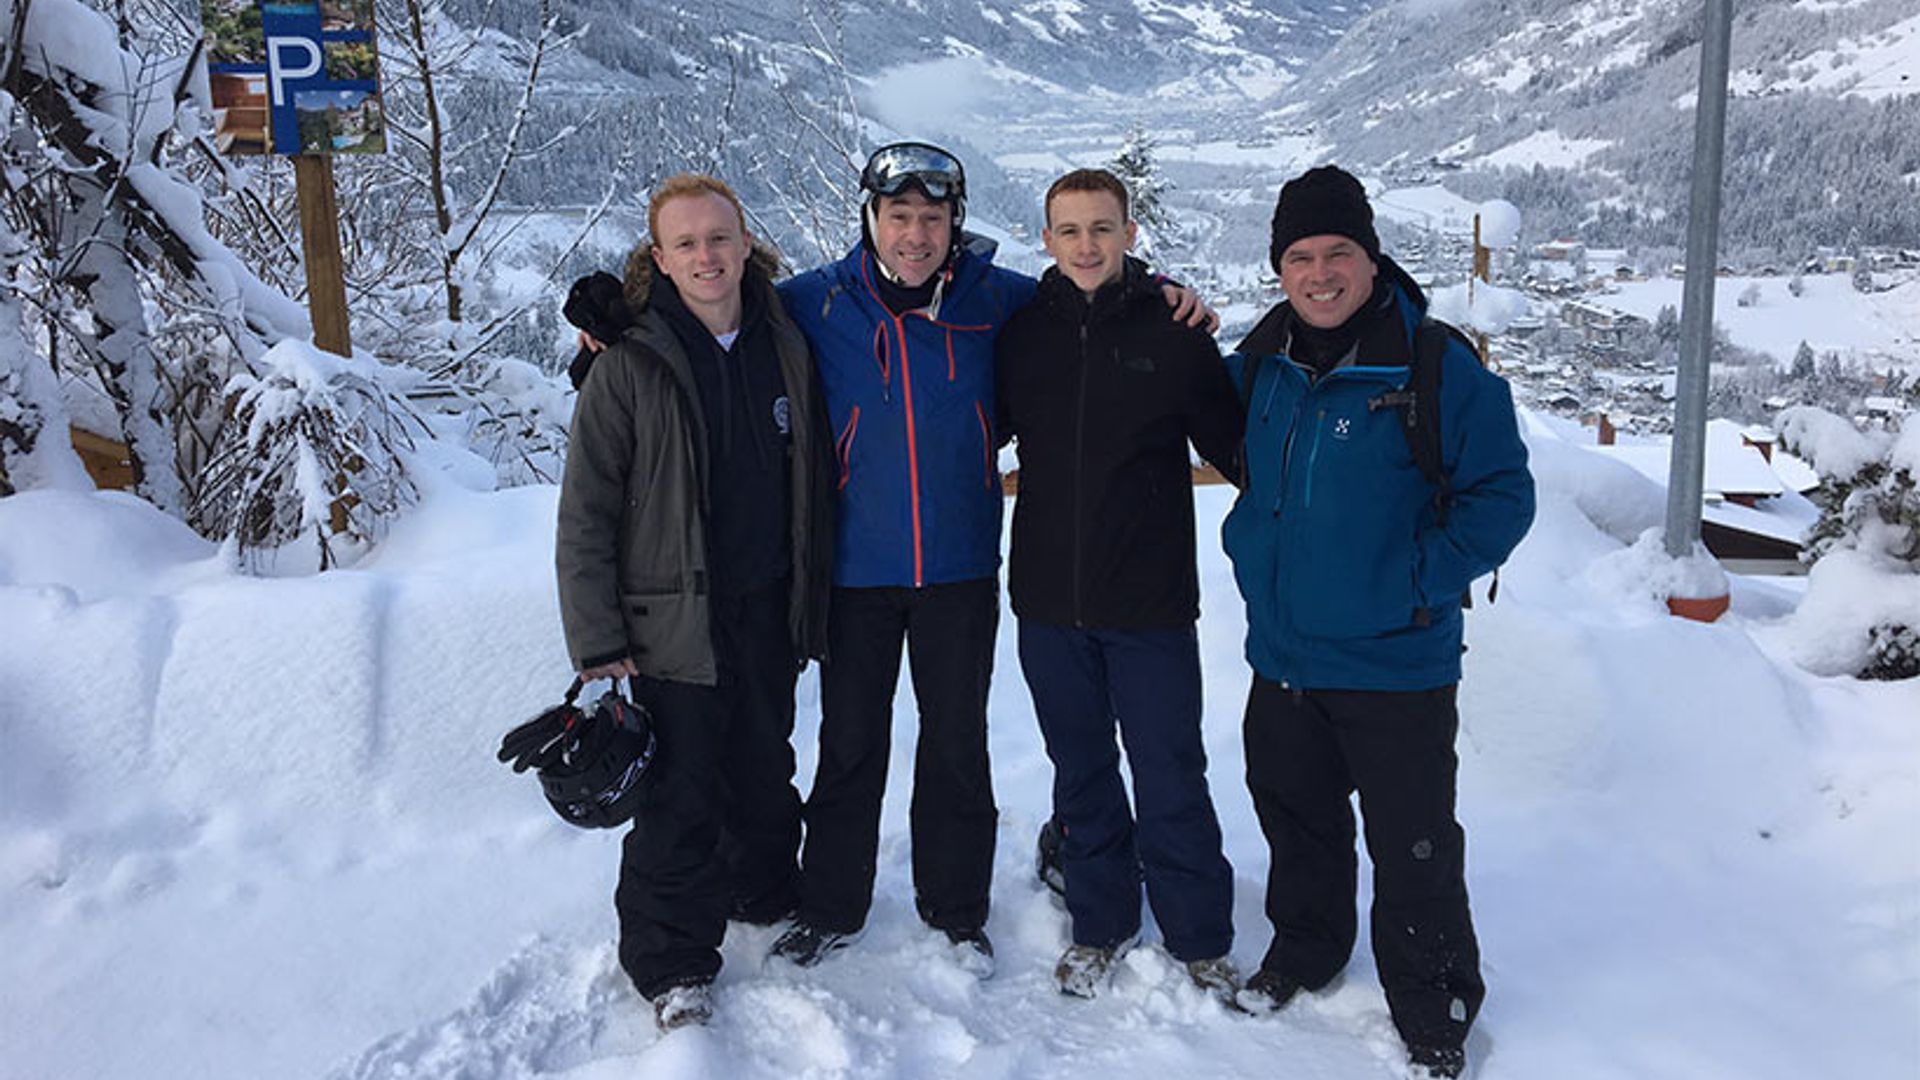 Family skiing in Austria: testing Crystal Ski's offerings in Bad Gastein